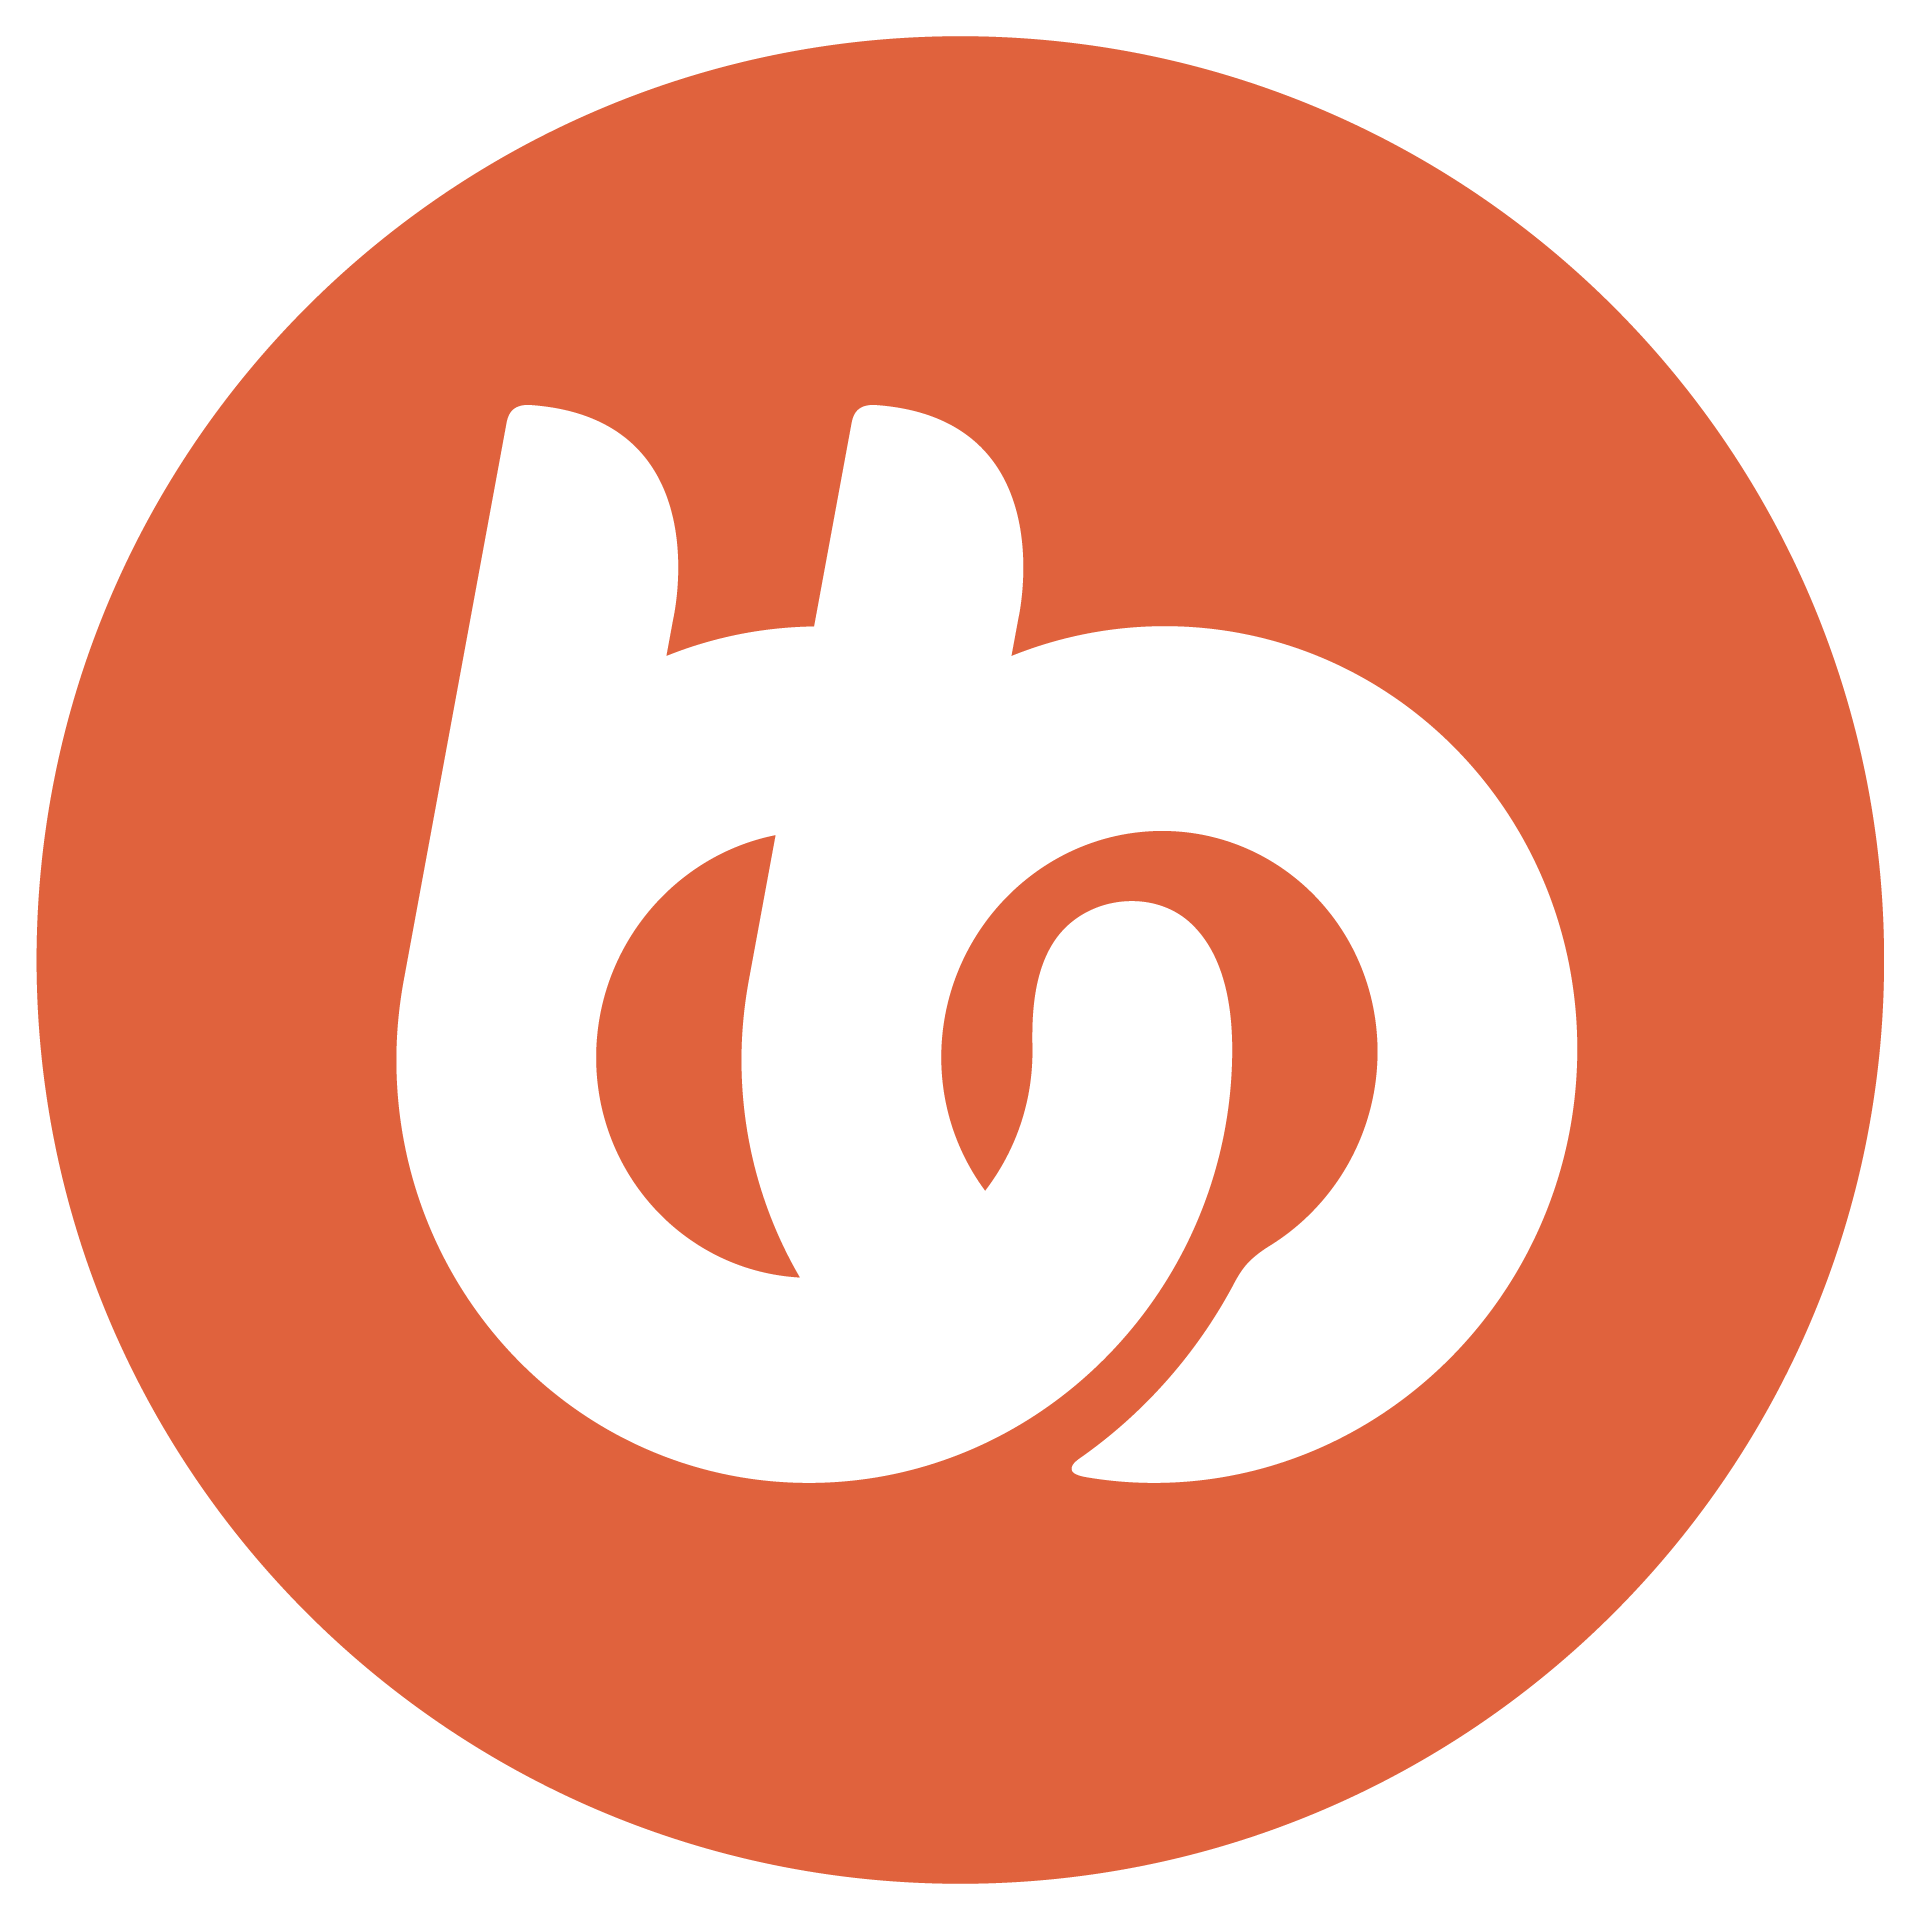 Buddyboss logo by lmscrafter